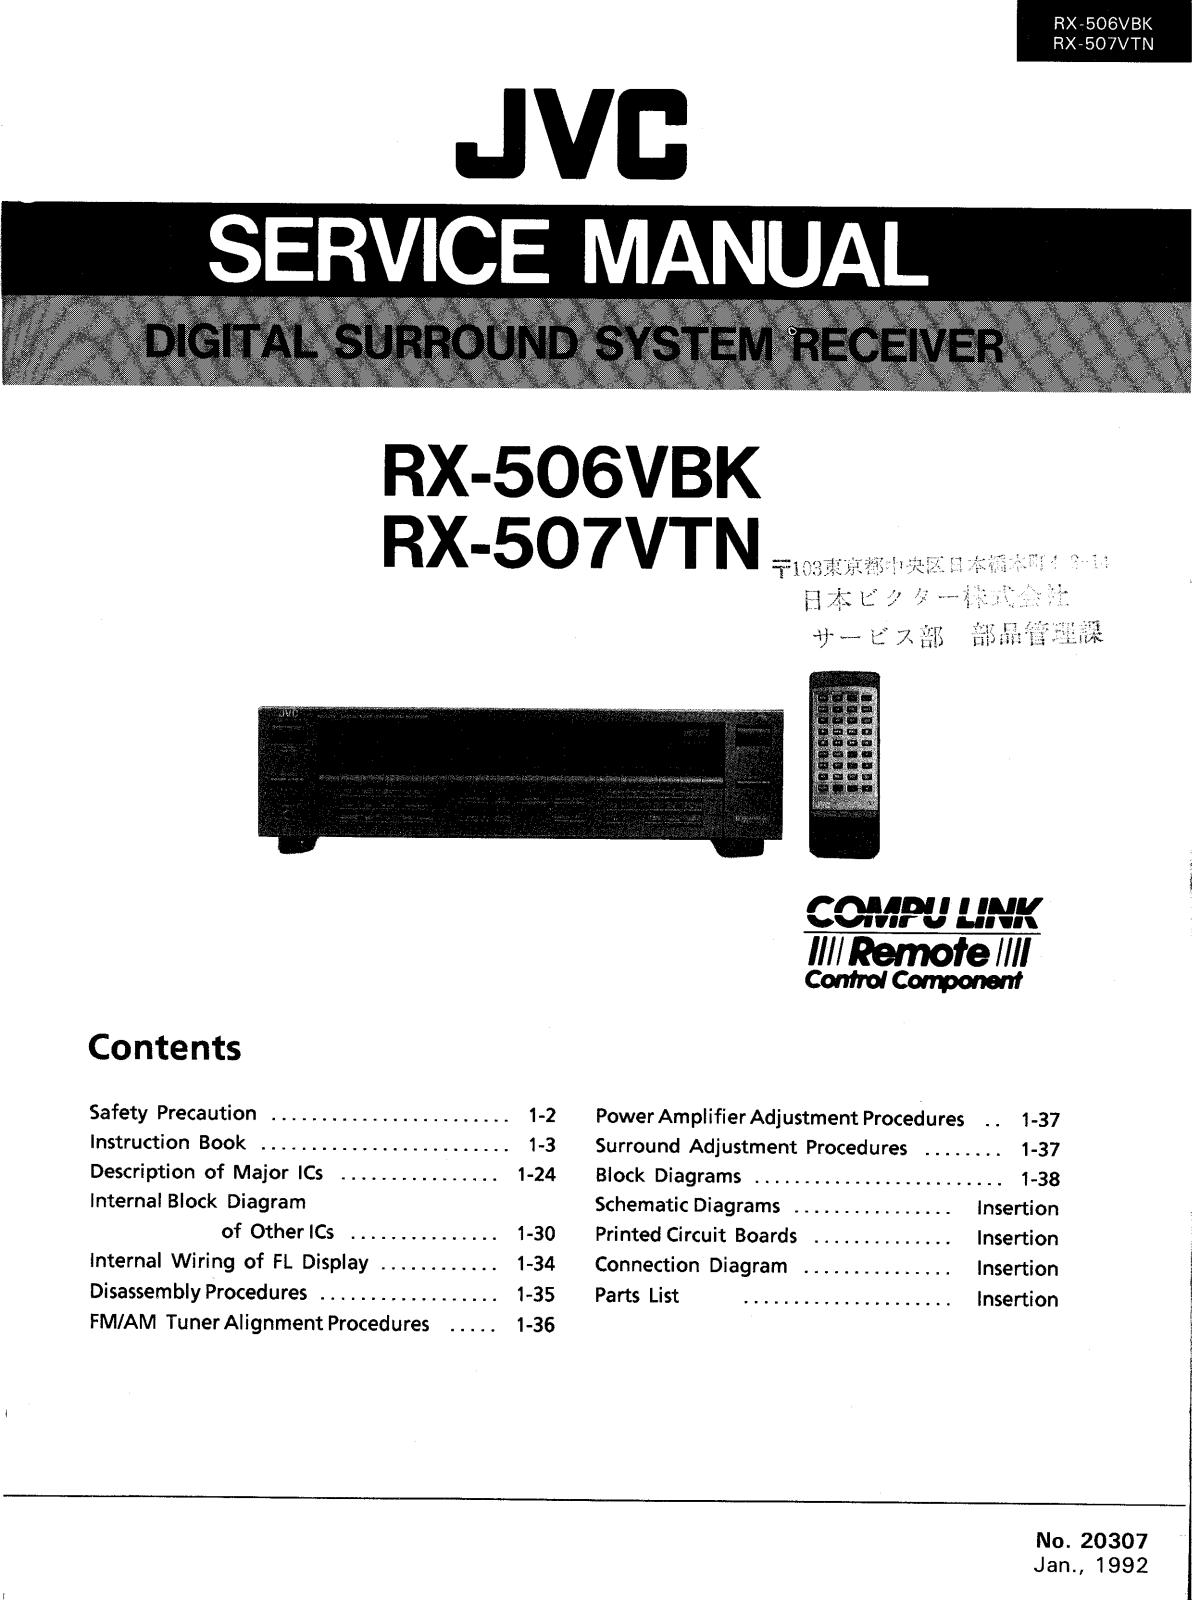 JVC RX-506-VBK, RX-507-VTN Service manual